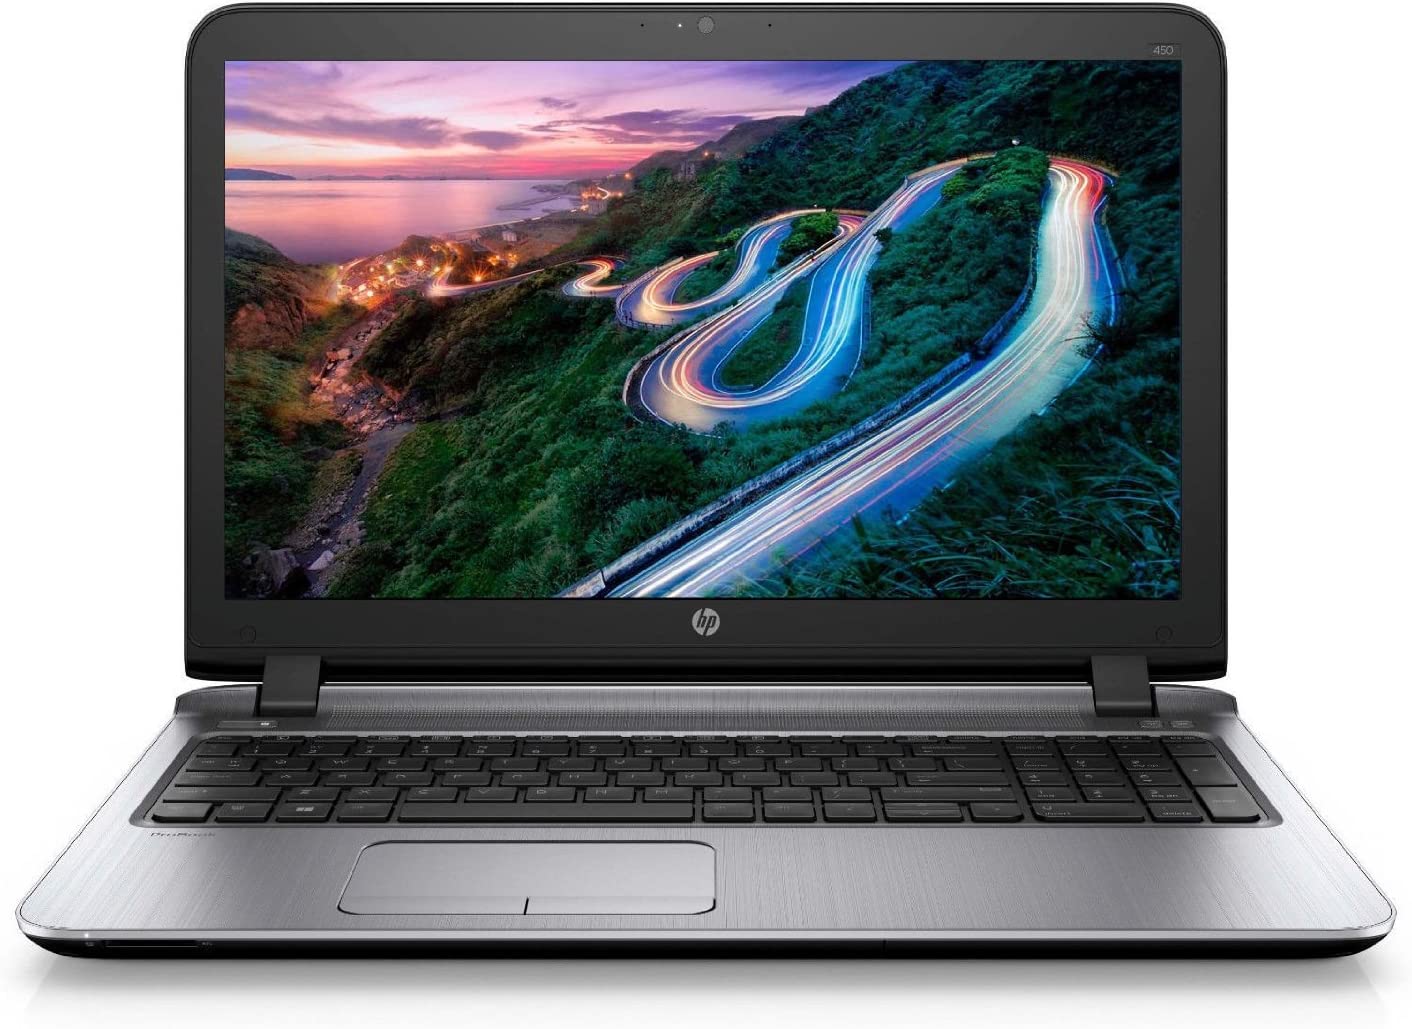 HP Probook 450 G2 Core i5-5600M 2.60 GHZ , 17.3 inches hd display windows 10 Pro (Renewed)